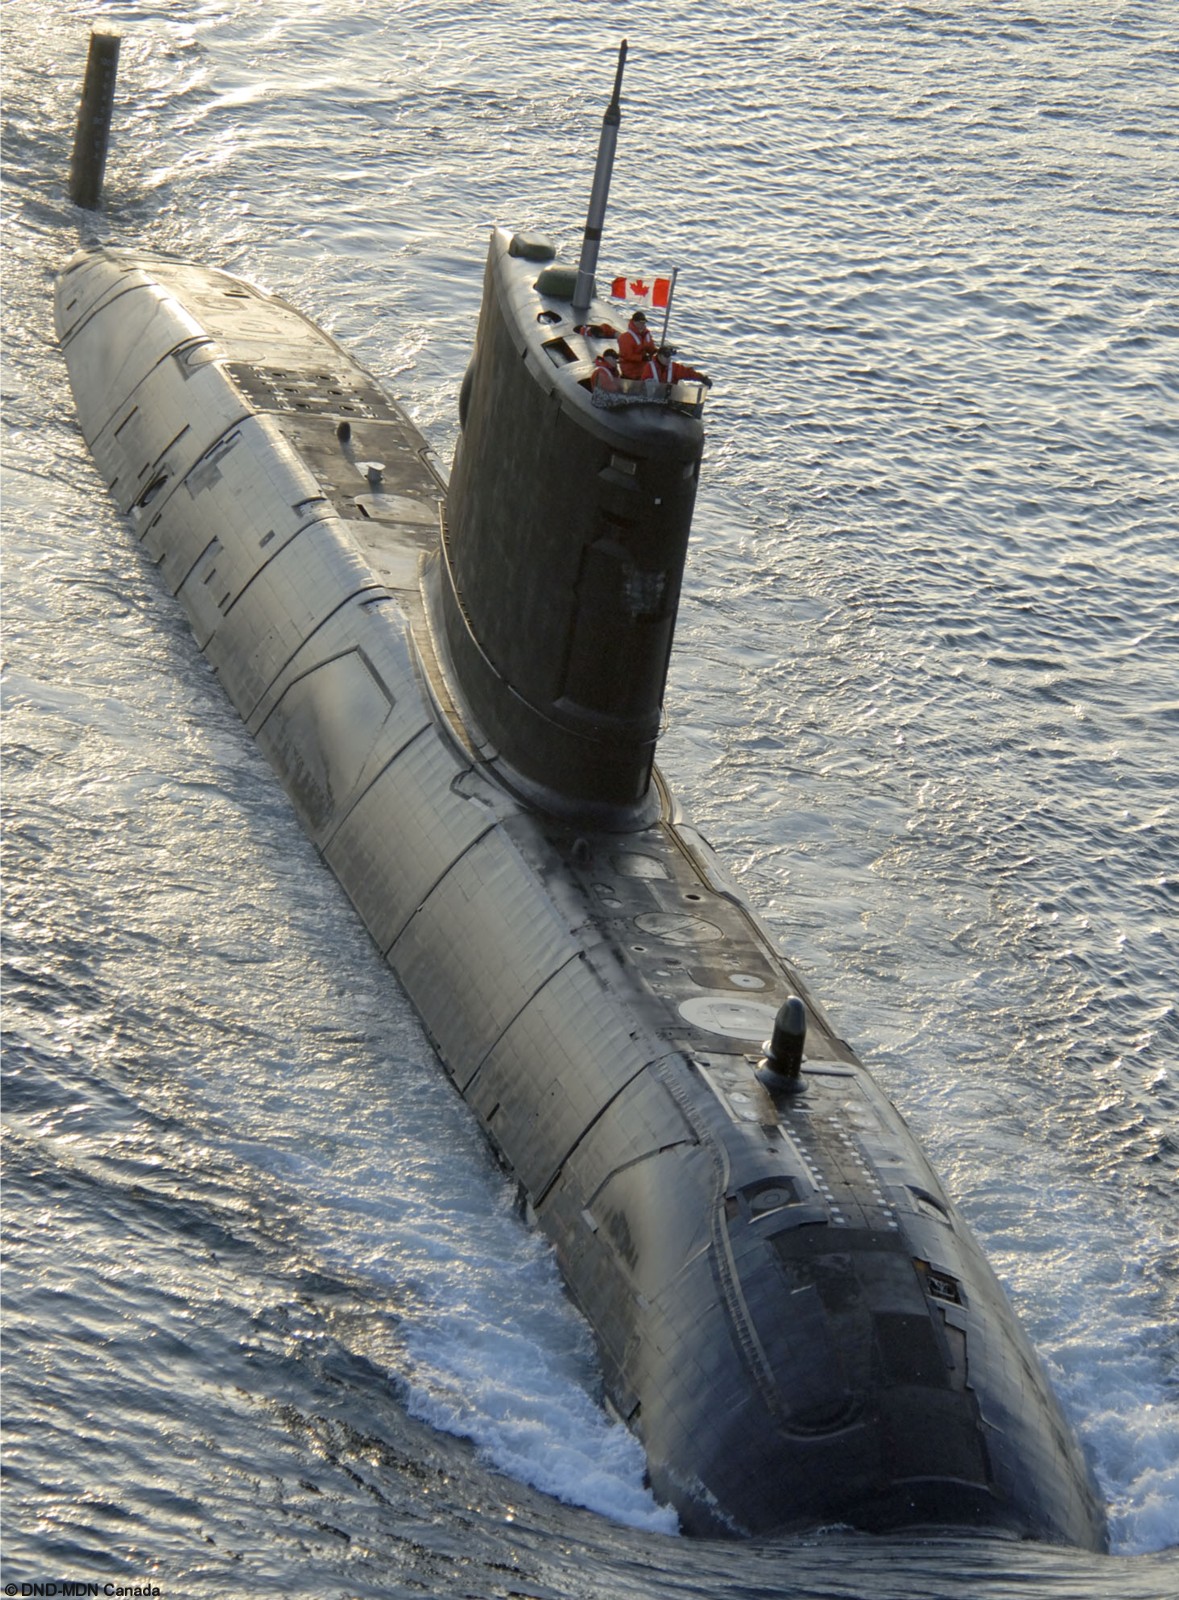 ssk-878 hmcs corner brook victoria upholder class patrol submarine ncsm royal canadian navy 16